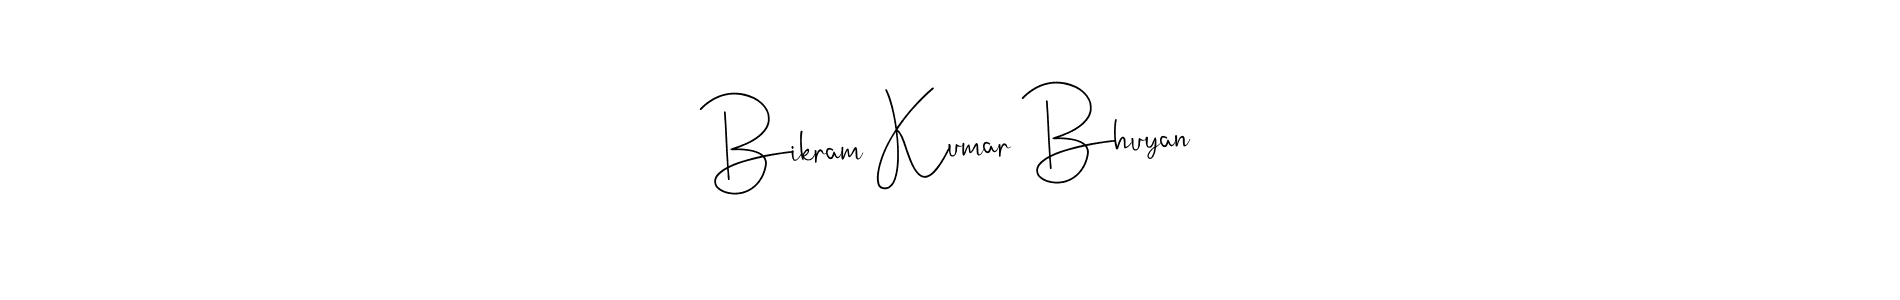 How to Draw Bikram Kumar Bhuyan signature style? Andilay-7BmLP is a latest design signature styles for name Bikram Kumar Bhuyan. Bikram Kumar Bhuyan signature style 4 images and pictures png